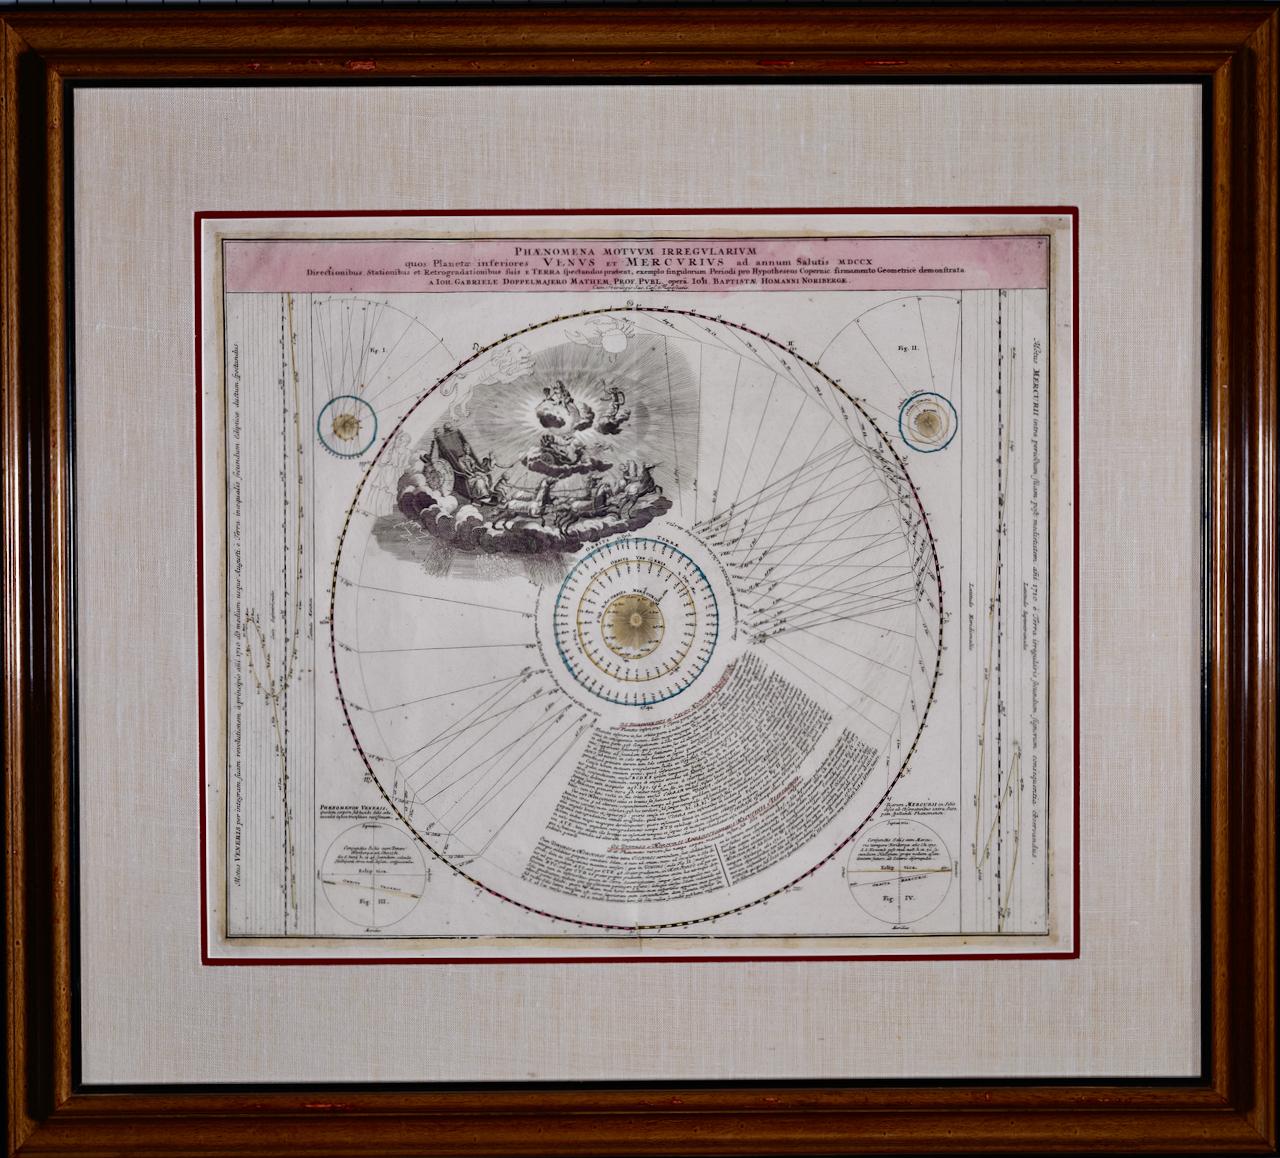 The Orbits of Venus and Mercury: An 18th C. Framed Celestial Map by Doppelmayr - Gray Print by Johann Gabriel Doppelmayr